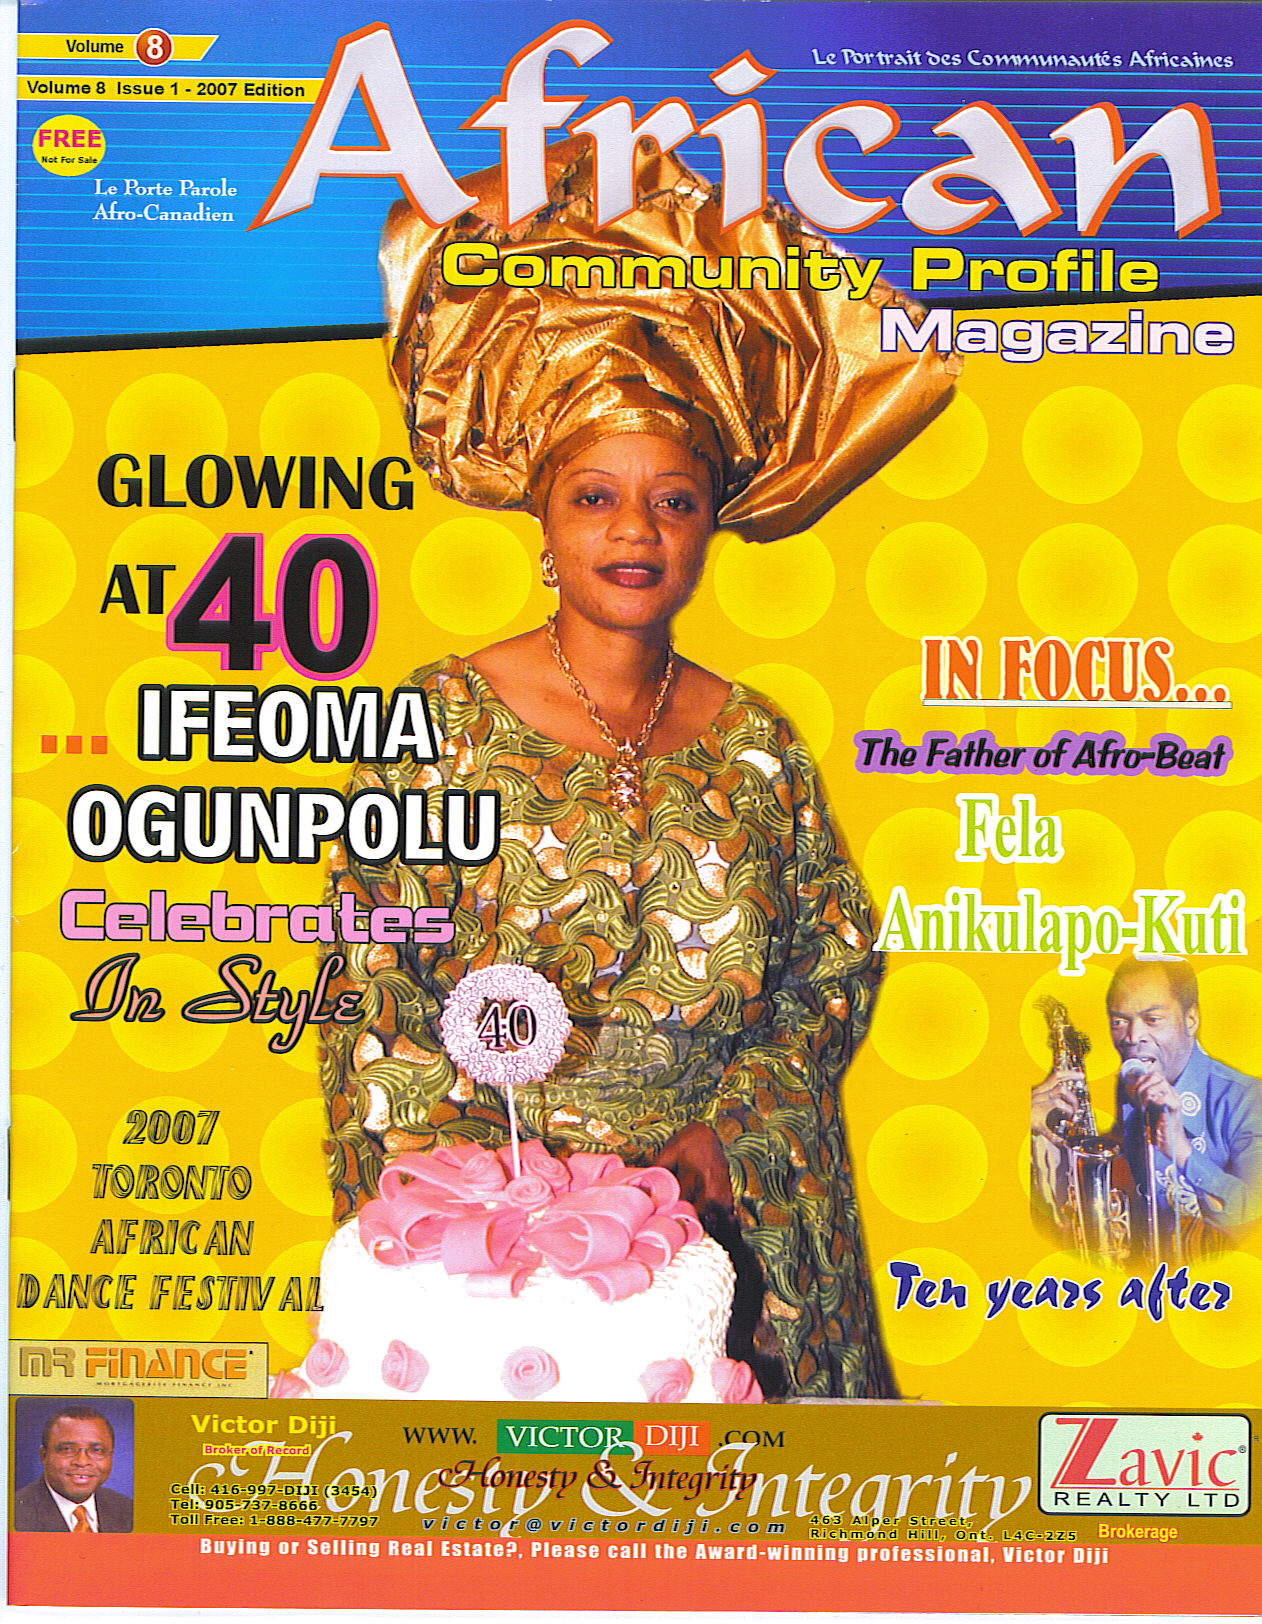 vol_8_issue1_2007_edition.jpg